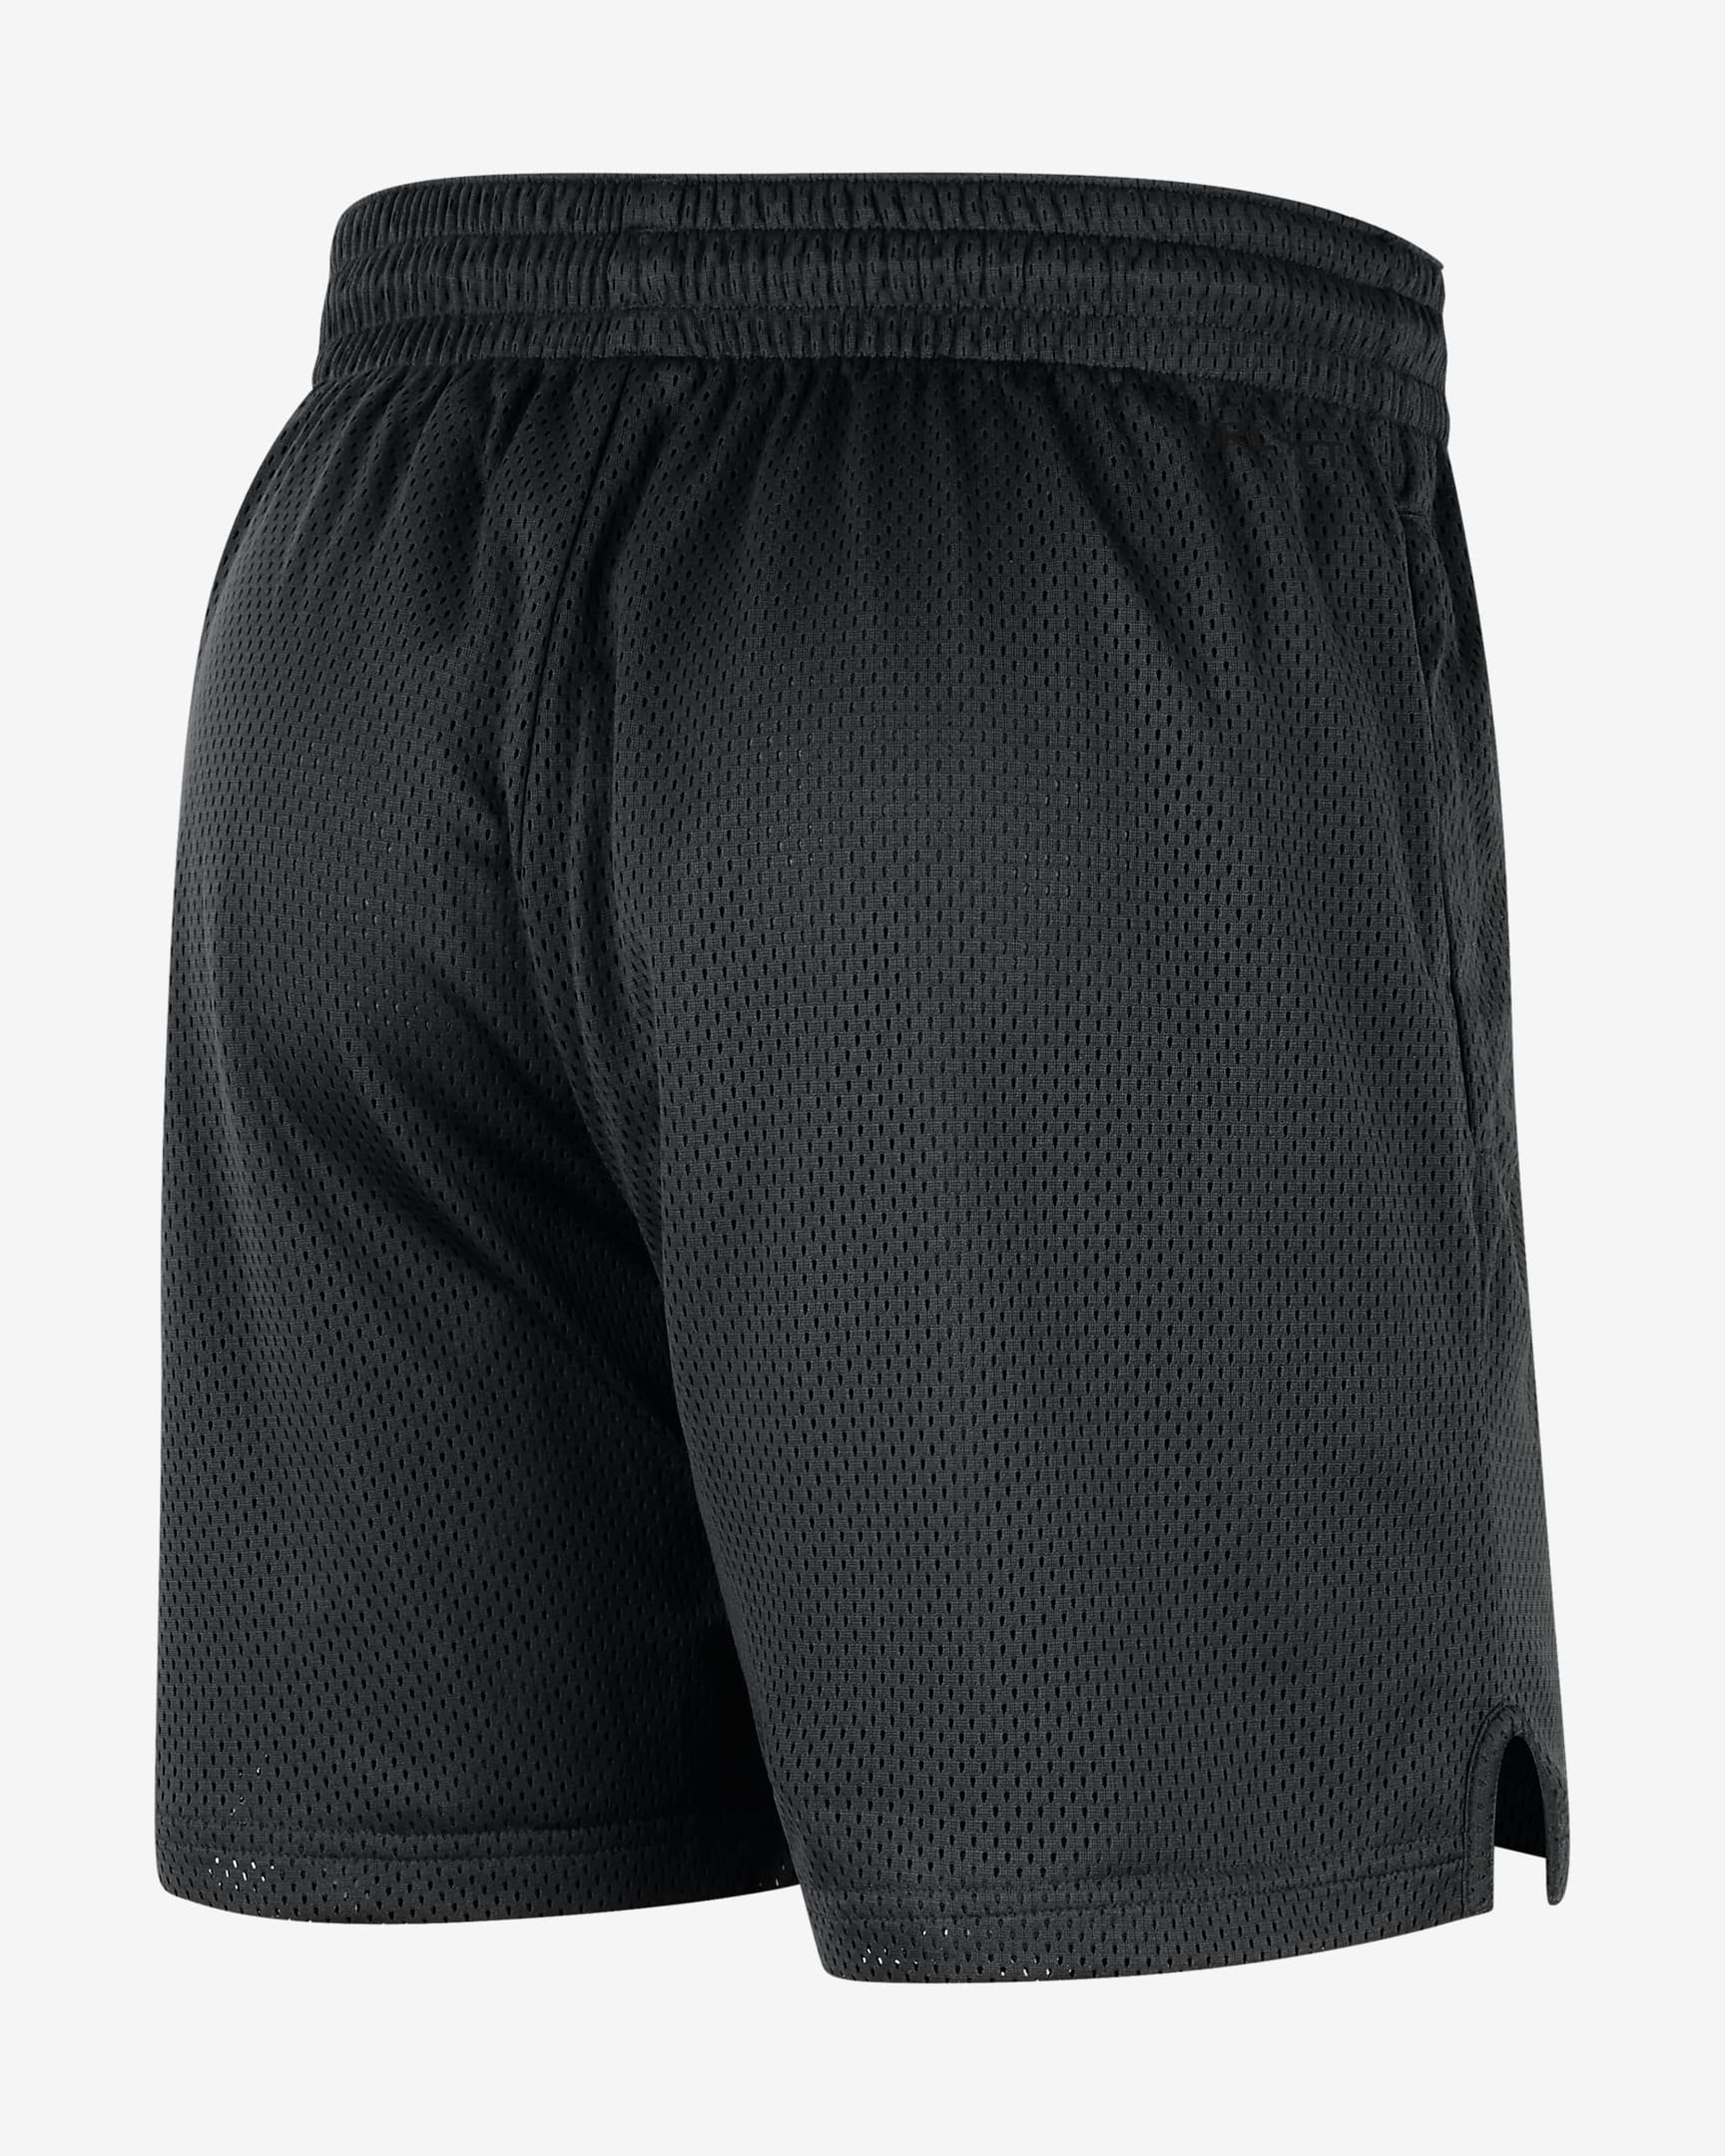 Shorts tejidos universitarios Nike Dri-FIT para hombre Iowa. Nike.com